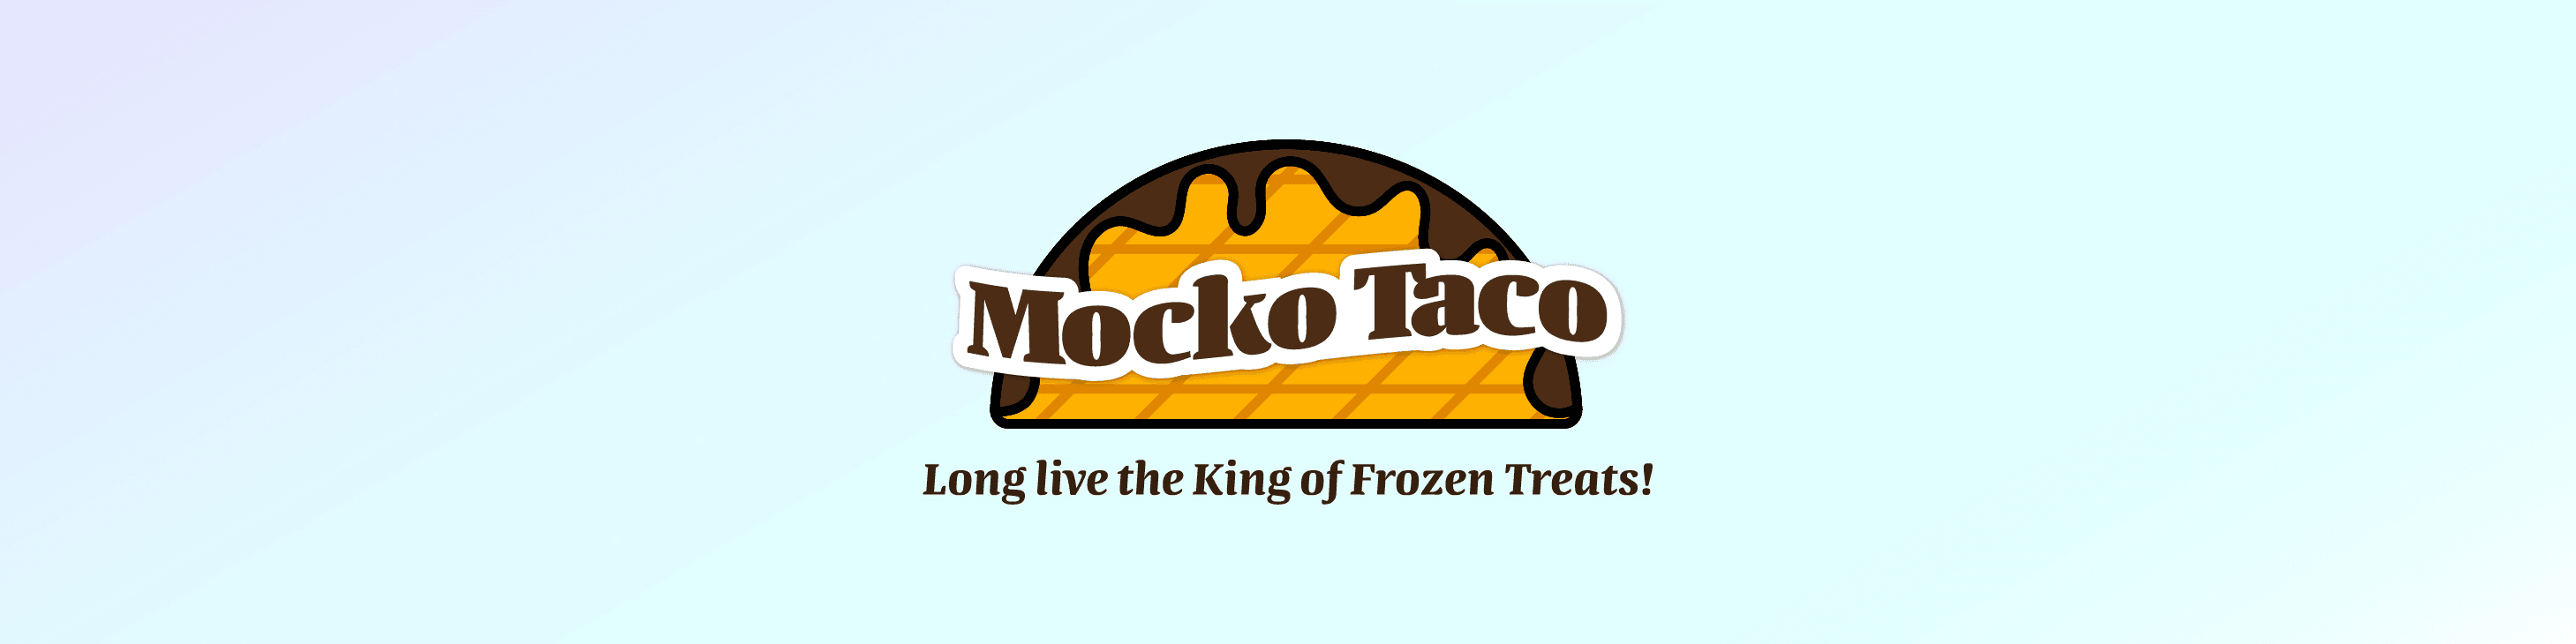 Mocko Taco